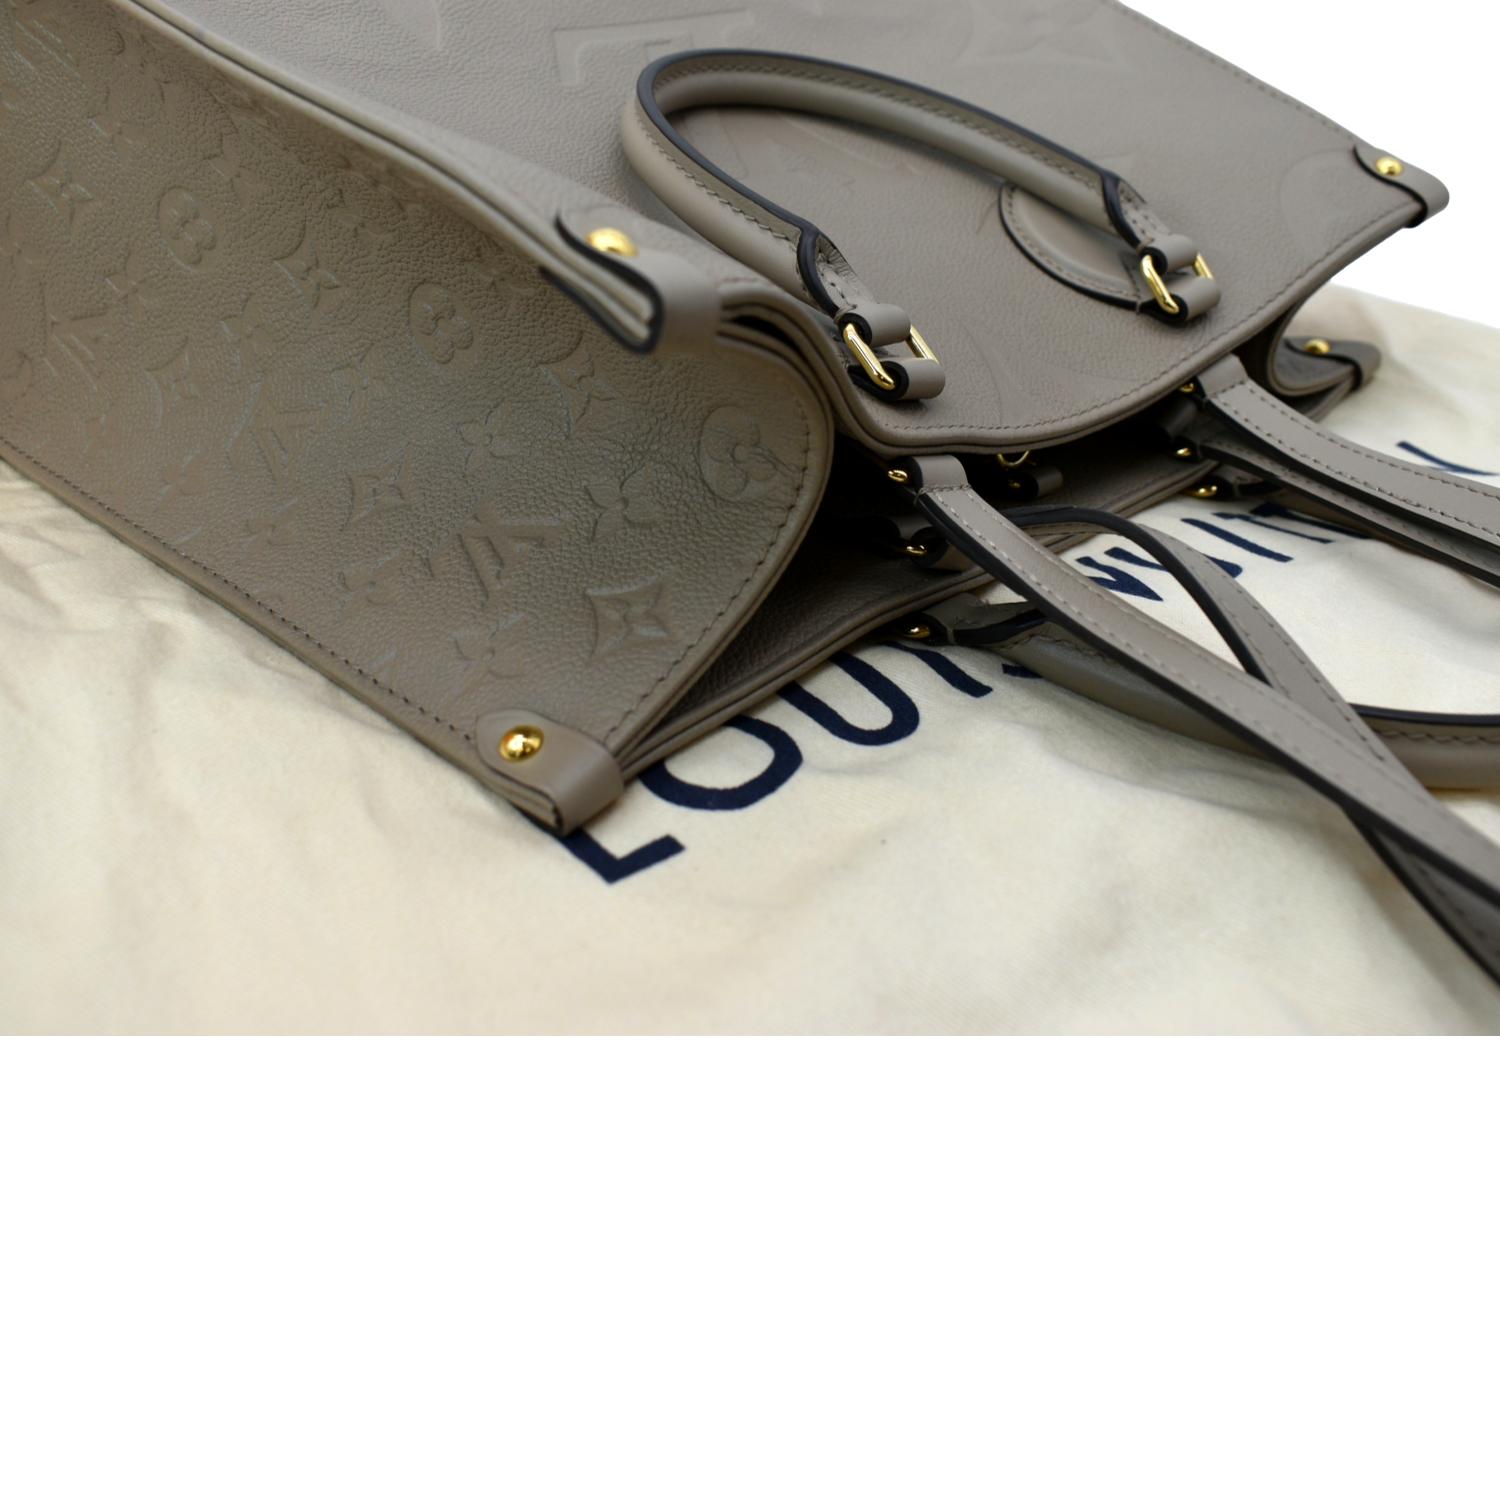 Louis Vuitton LV Monogram Empreinte Onthego MM Handbag Turtledove